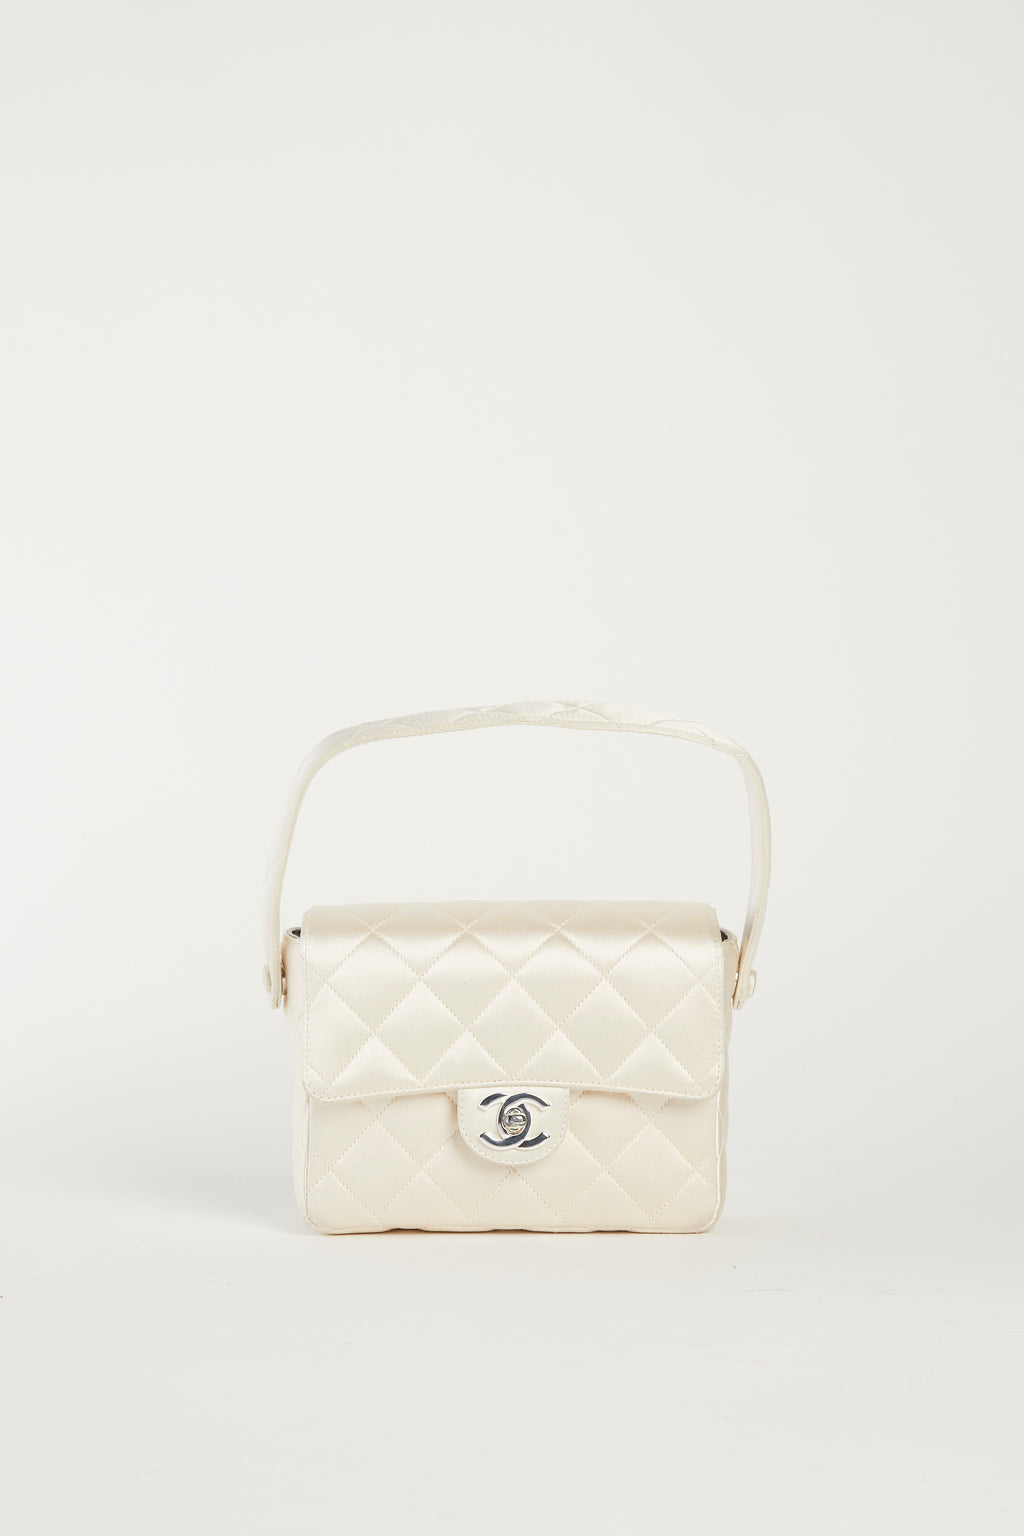 RARE Chanel Ivory Silk Mini Top Handle Bag